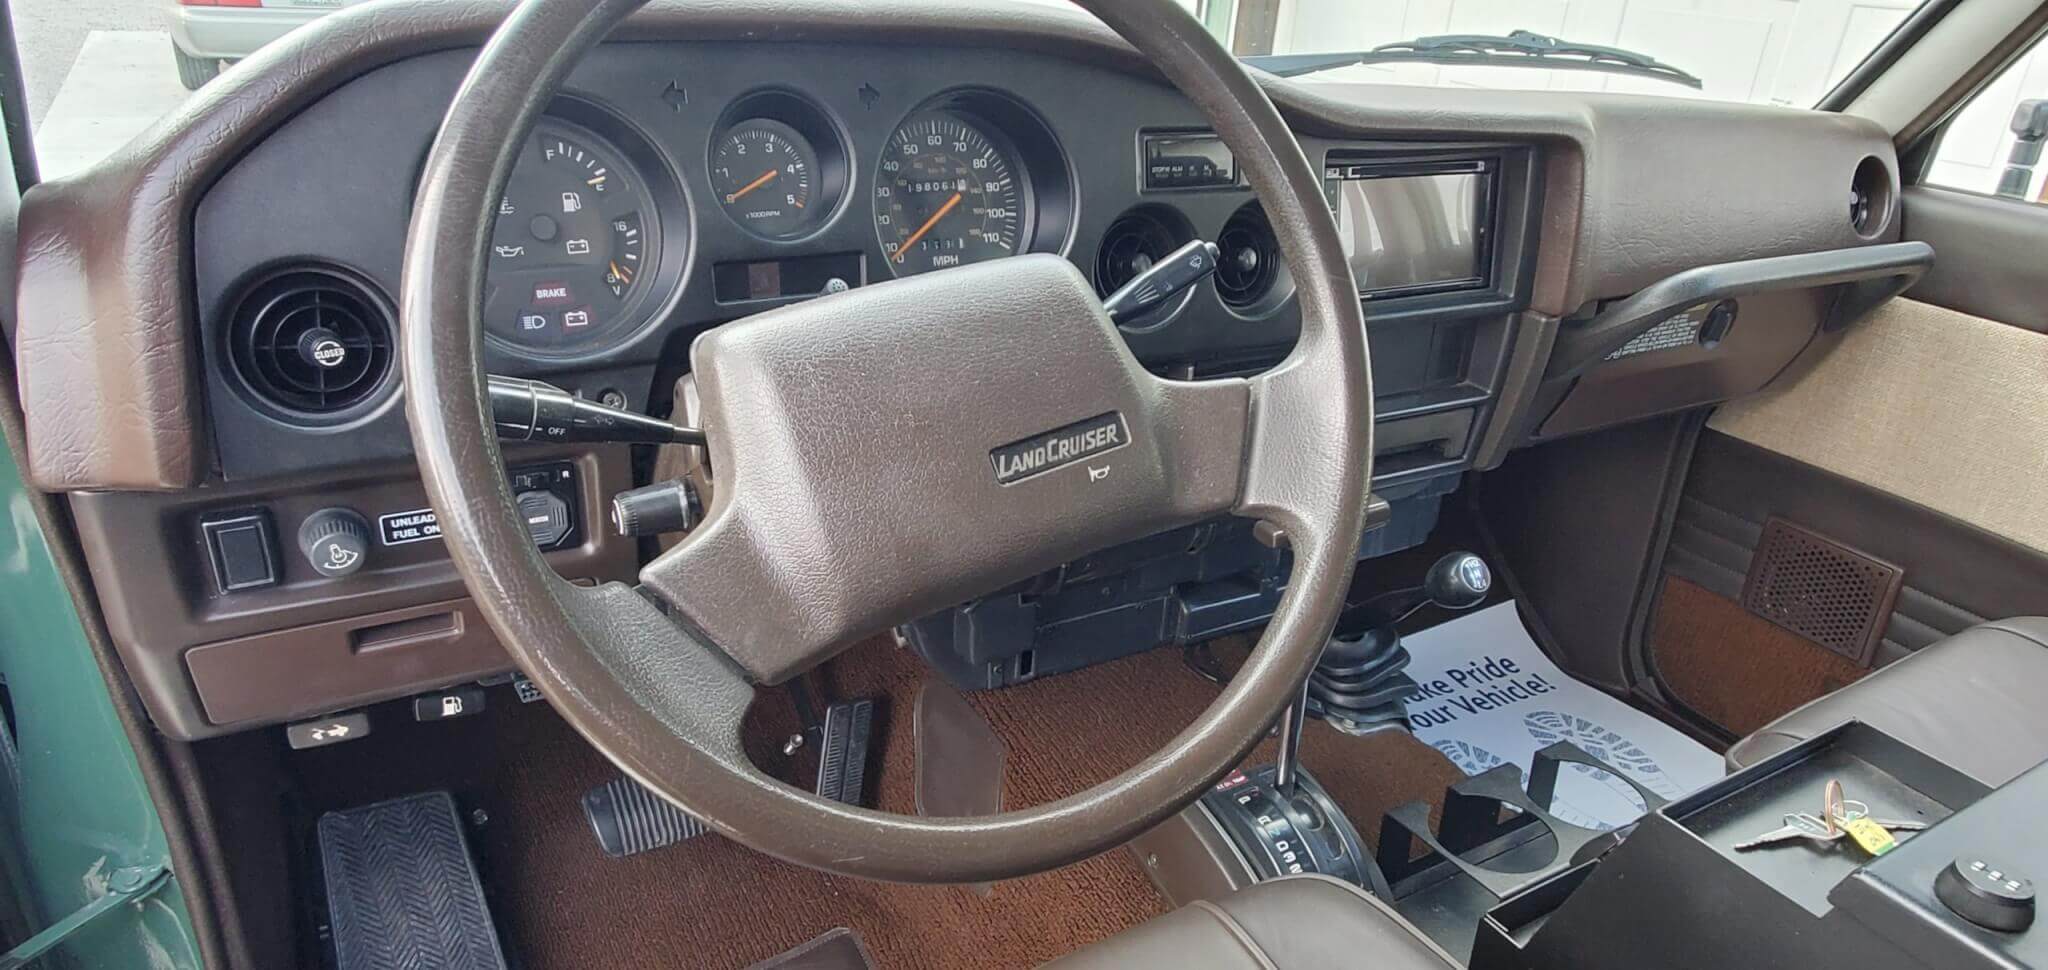 1984 FJ60 steering wheel